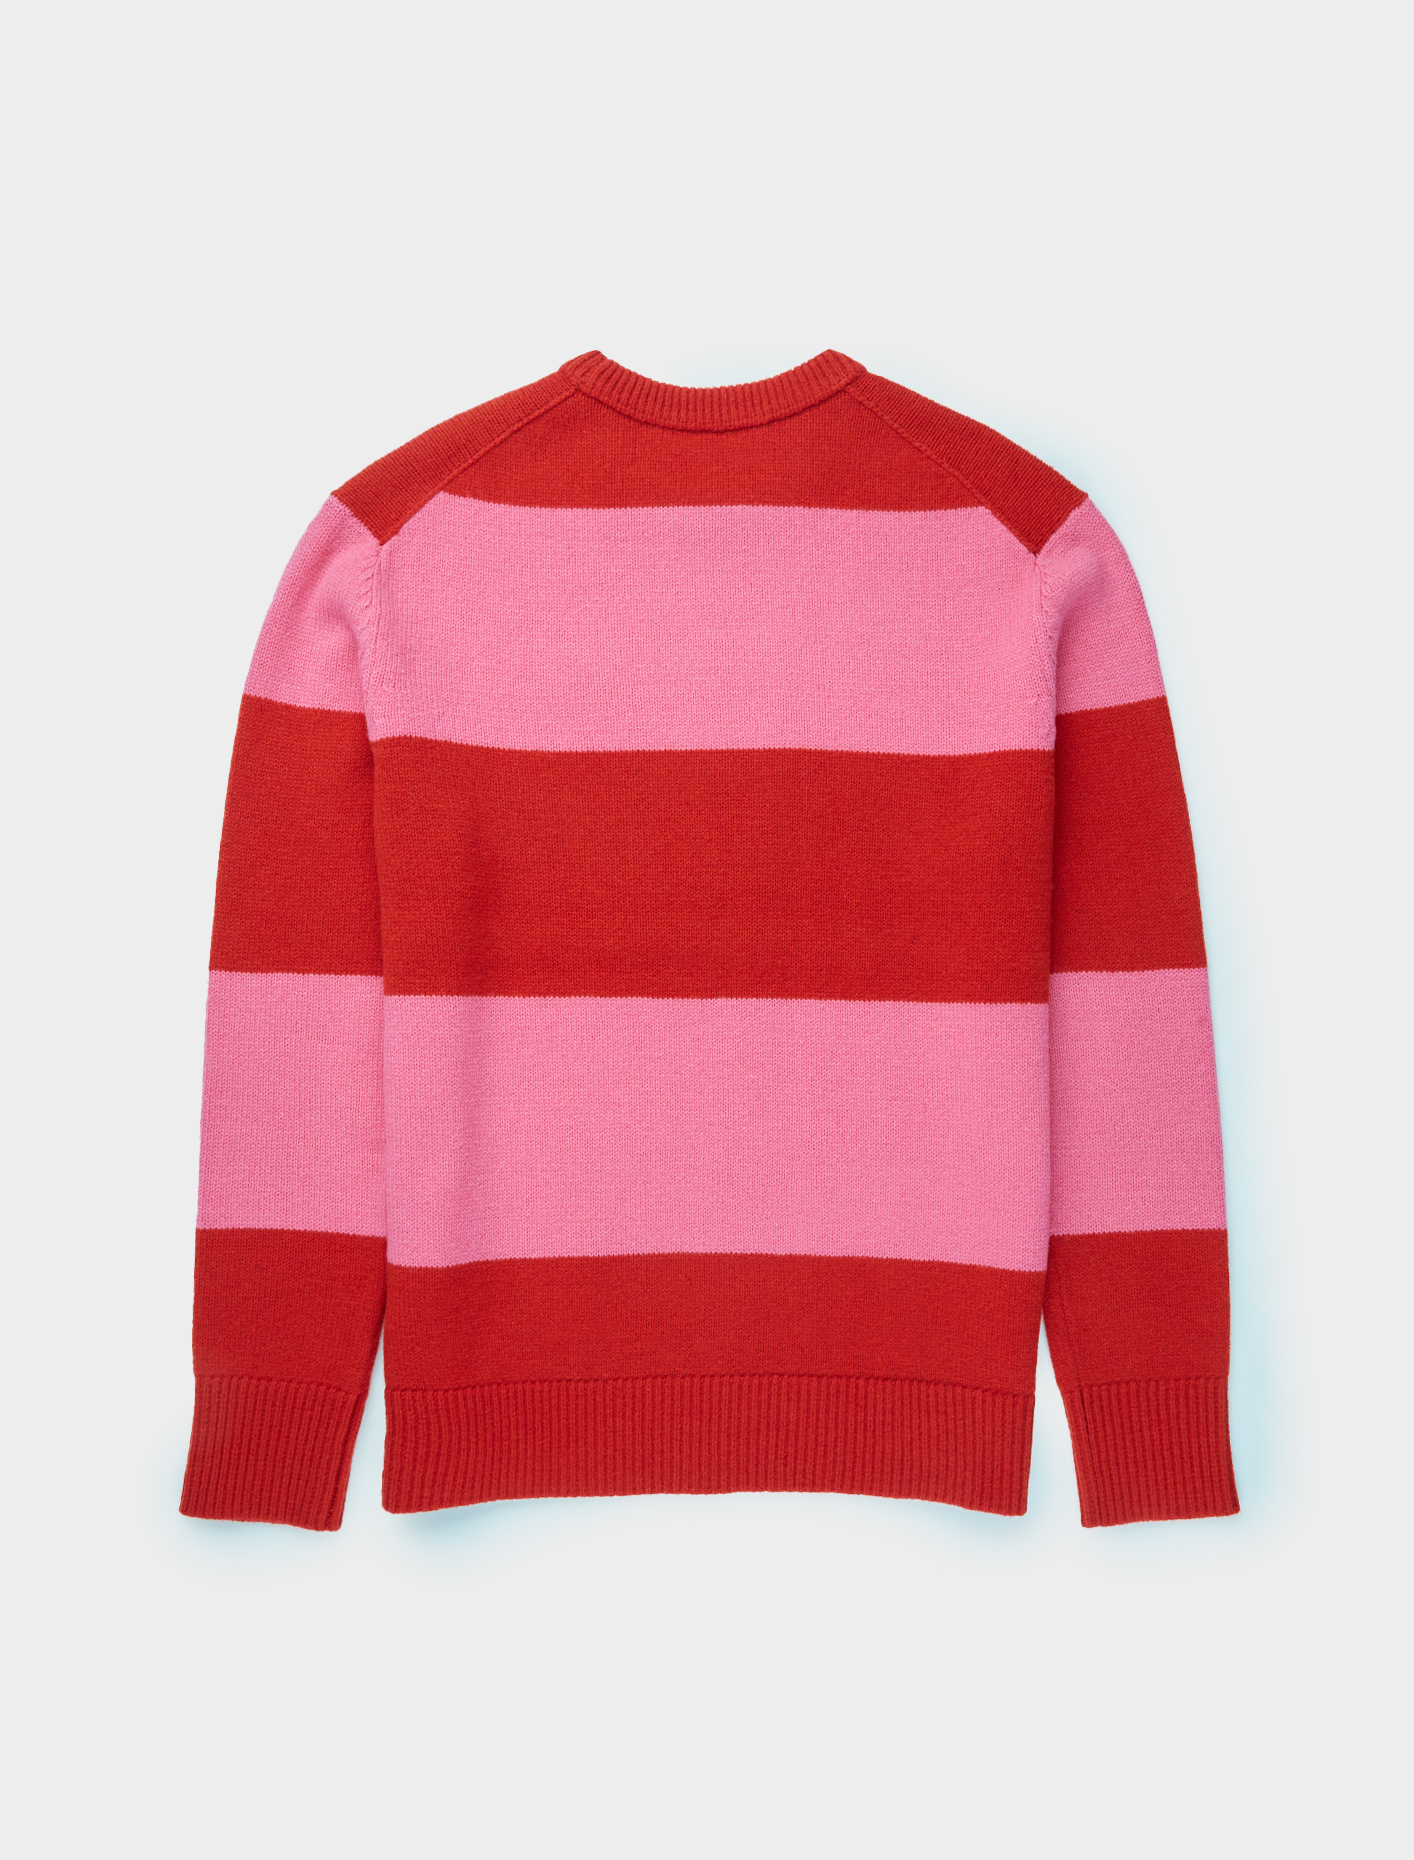 Acne Studios Block Stripe Sweater in 